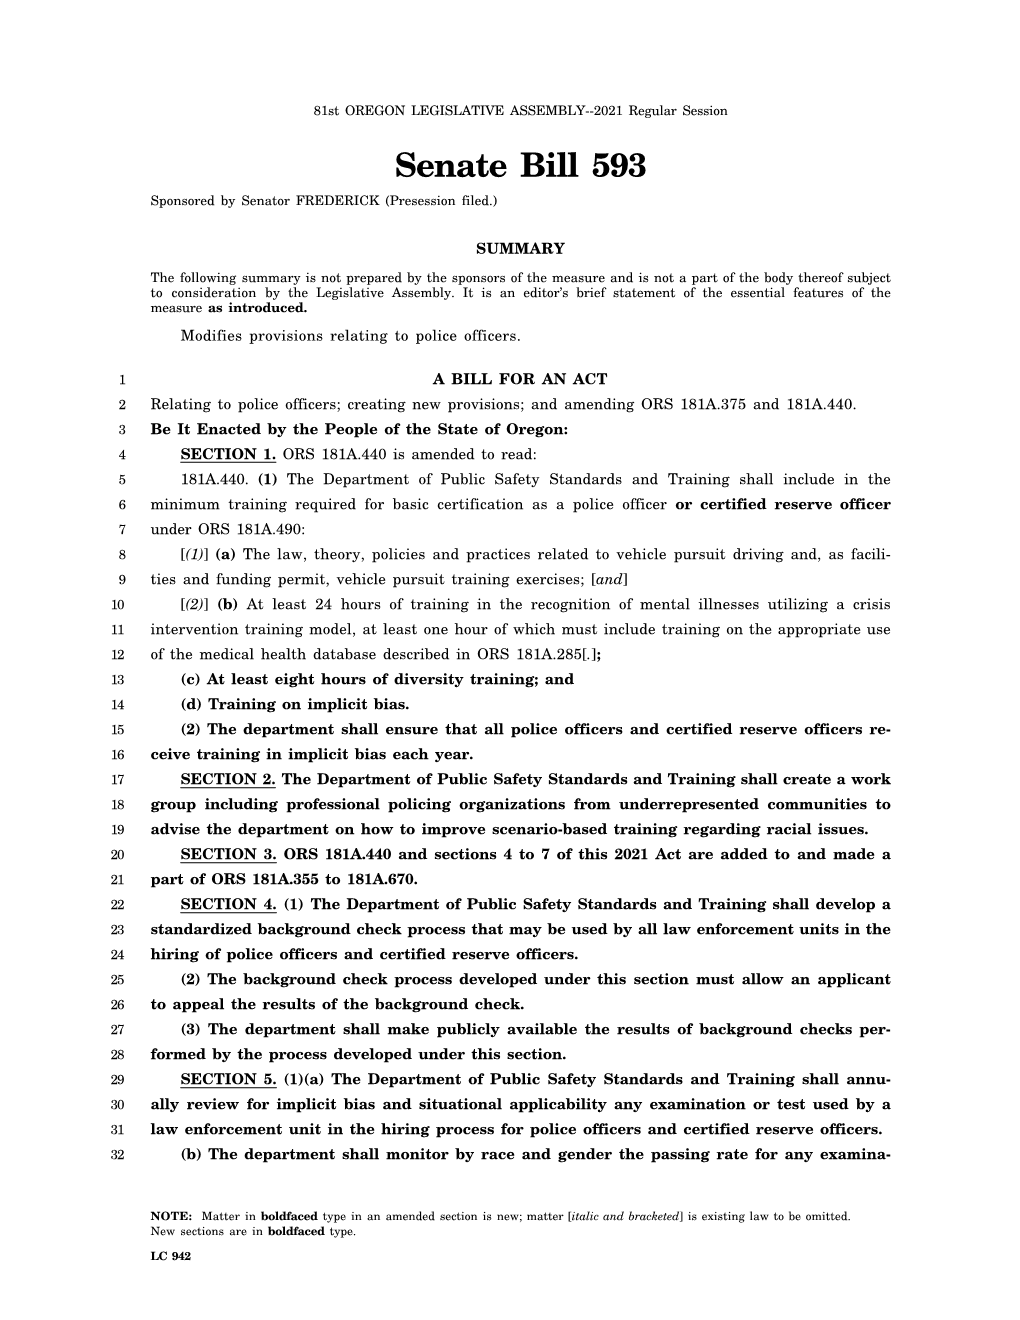 Senate Bill 593 Sponsored by Senator FREDERICK (Presession Filed.)